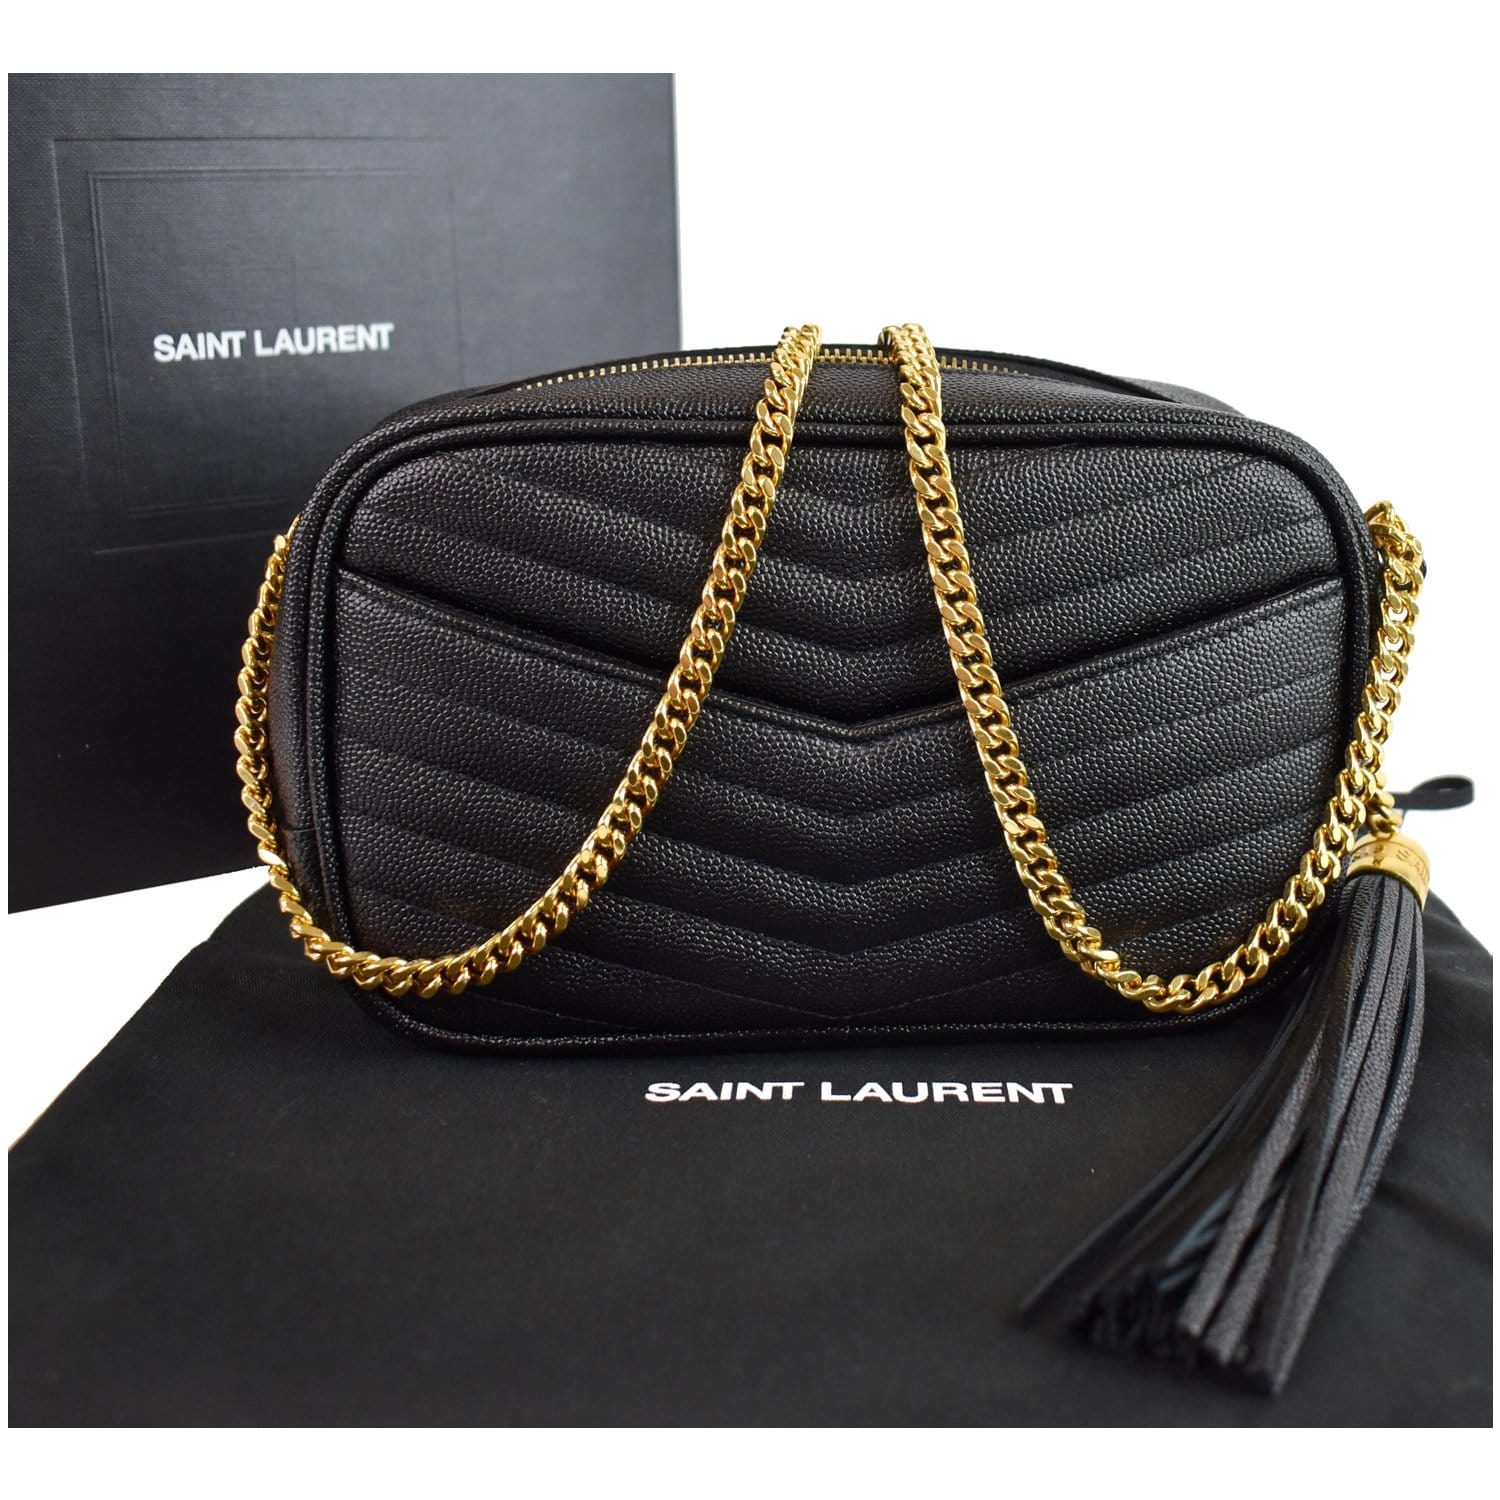 Saint Laurent Monogram Small Camera Bag in Black Grained Calfskin - SOLD